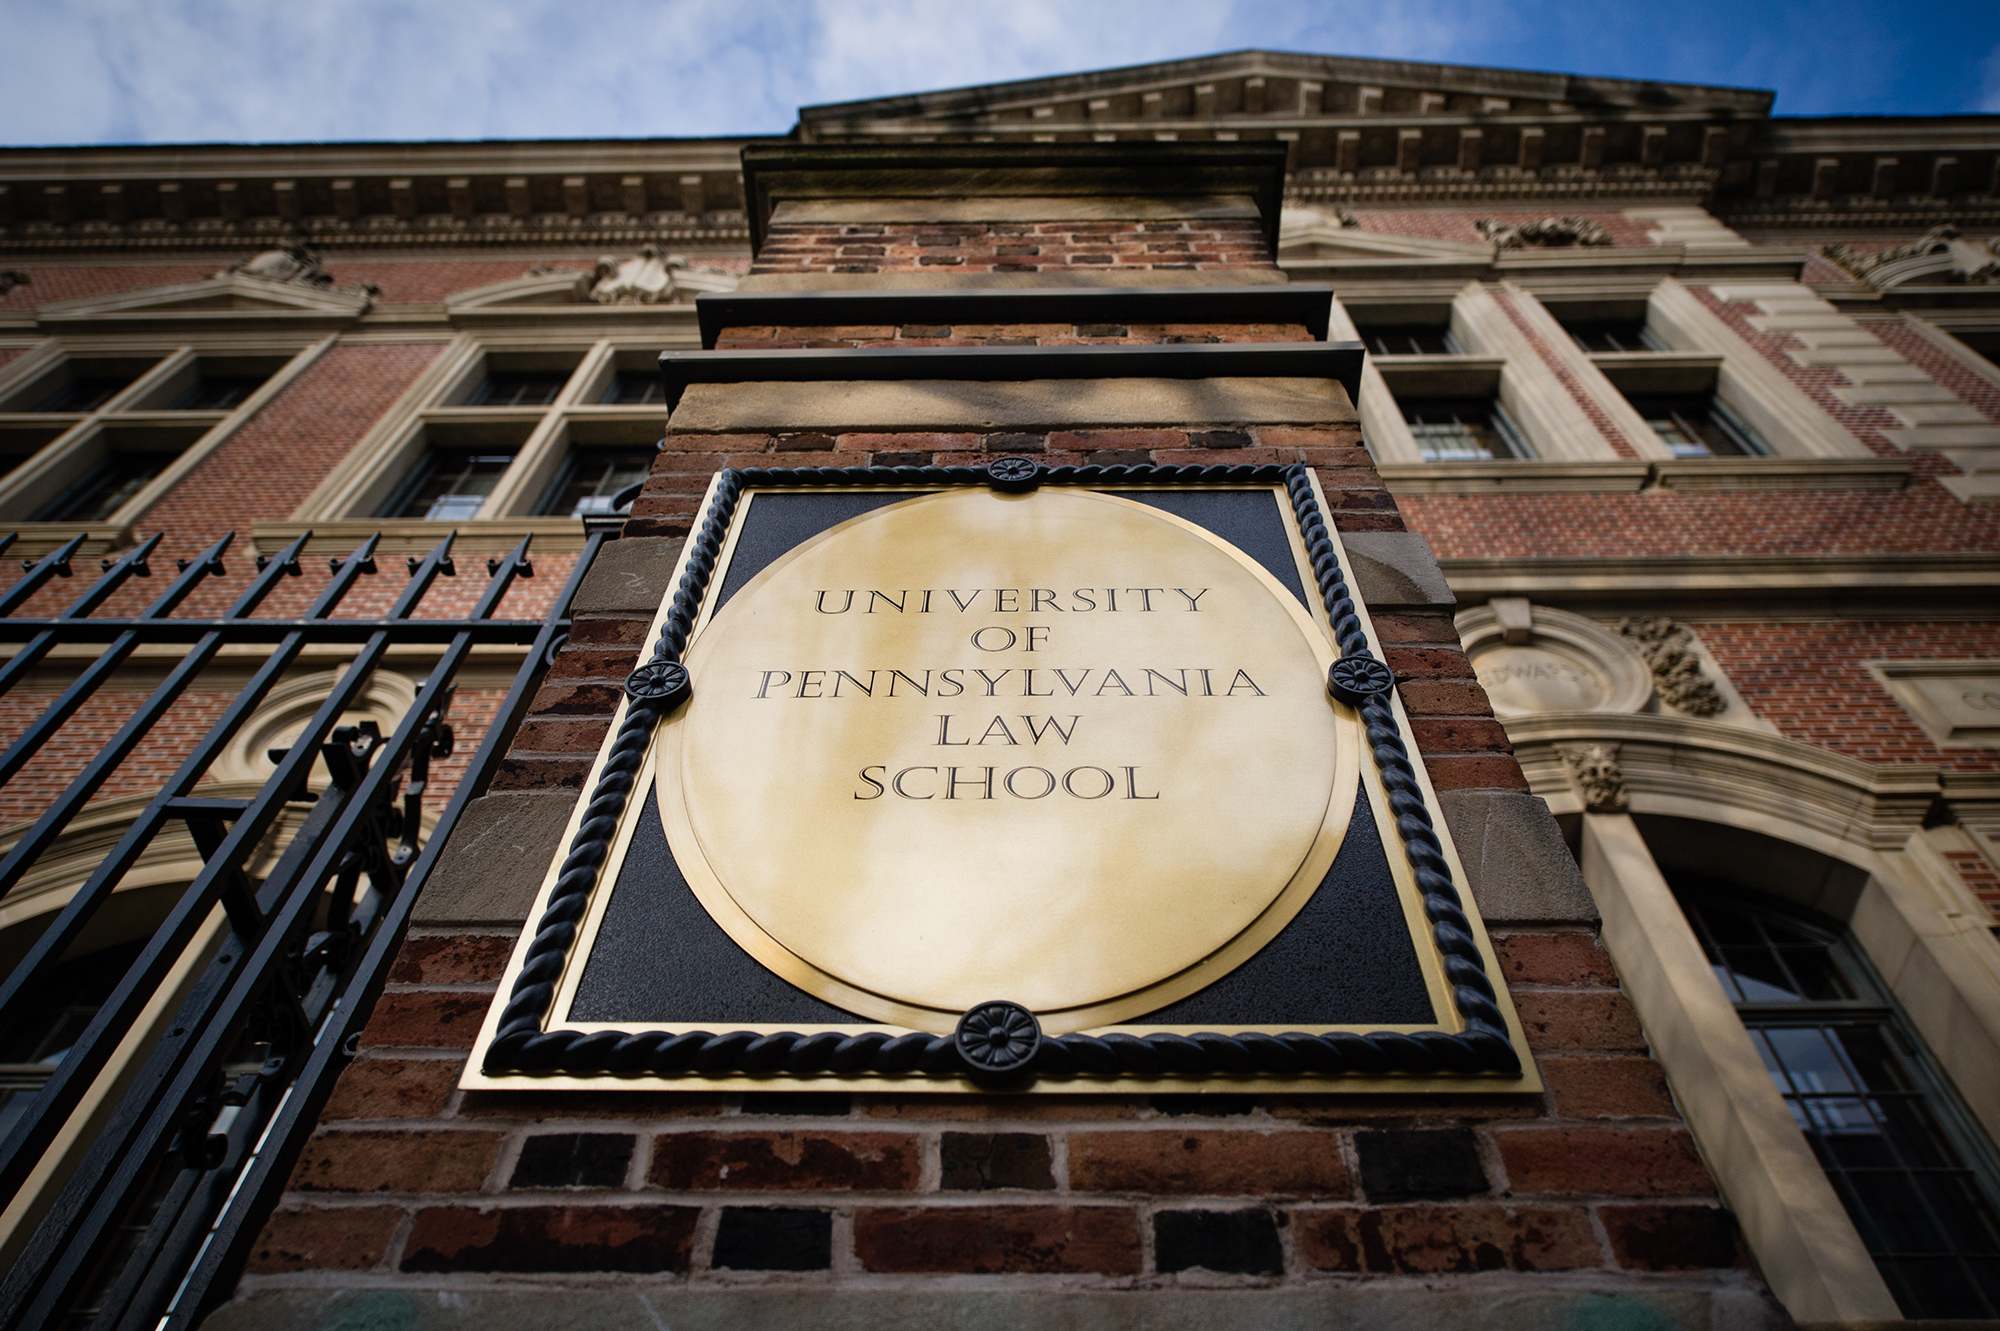 University of Pennsylvania Law School plaque on facade of Penn Law building